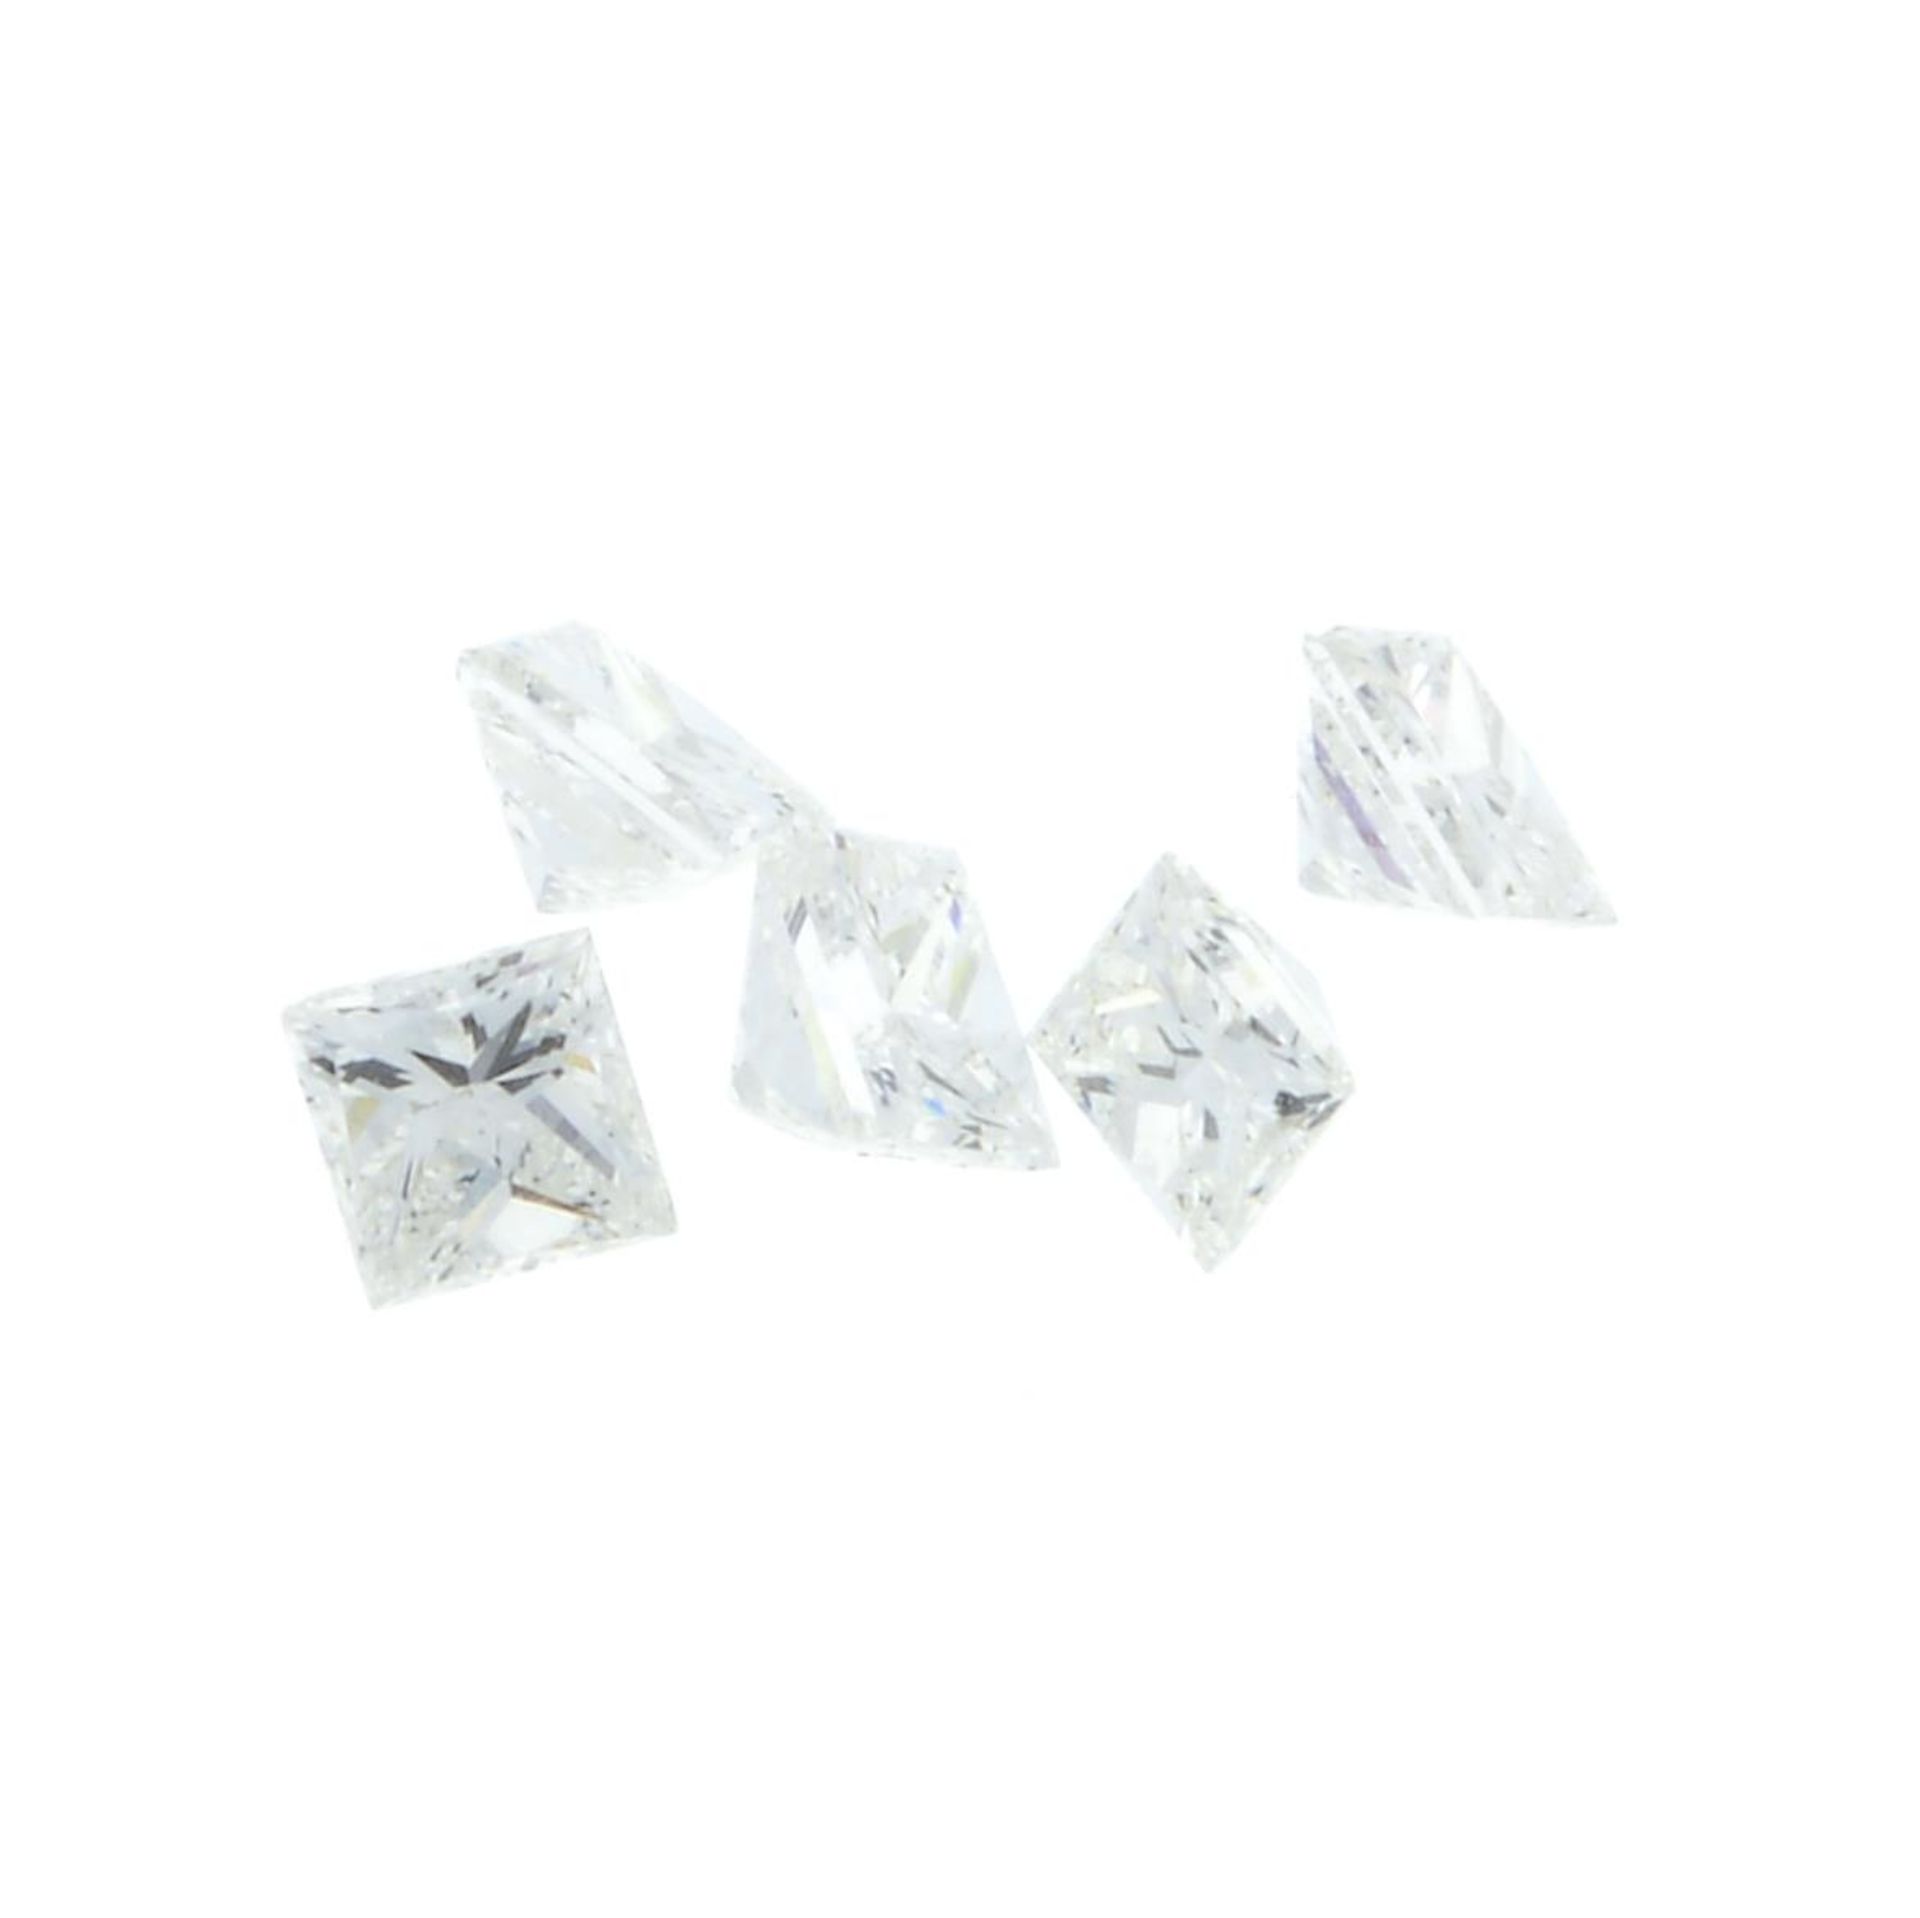 A selection of square-cut loose diamonds.